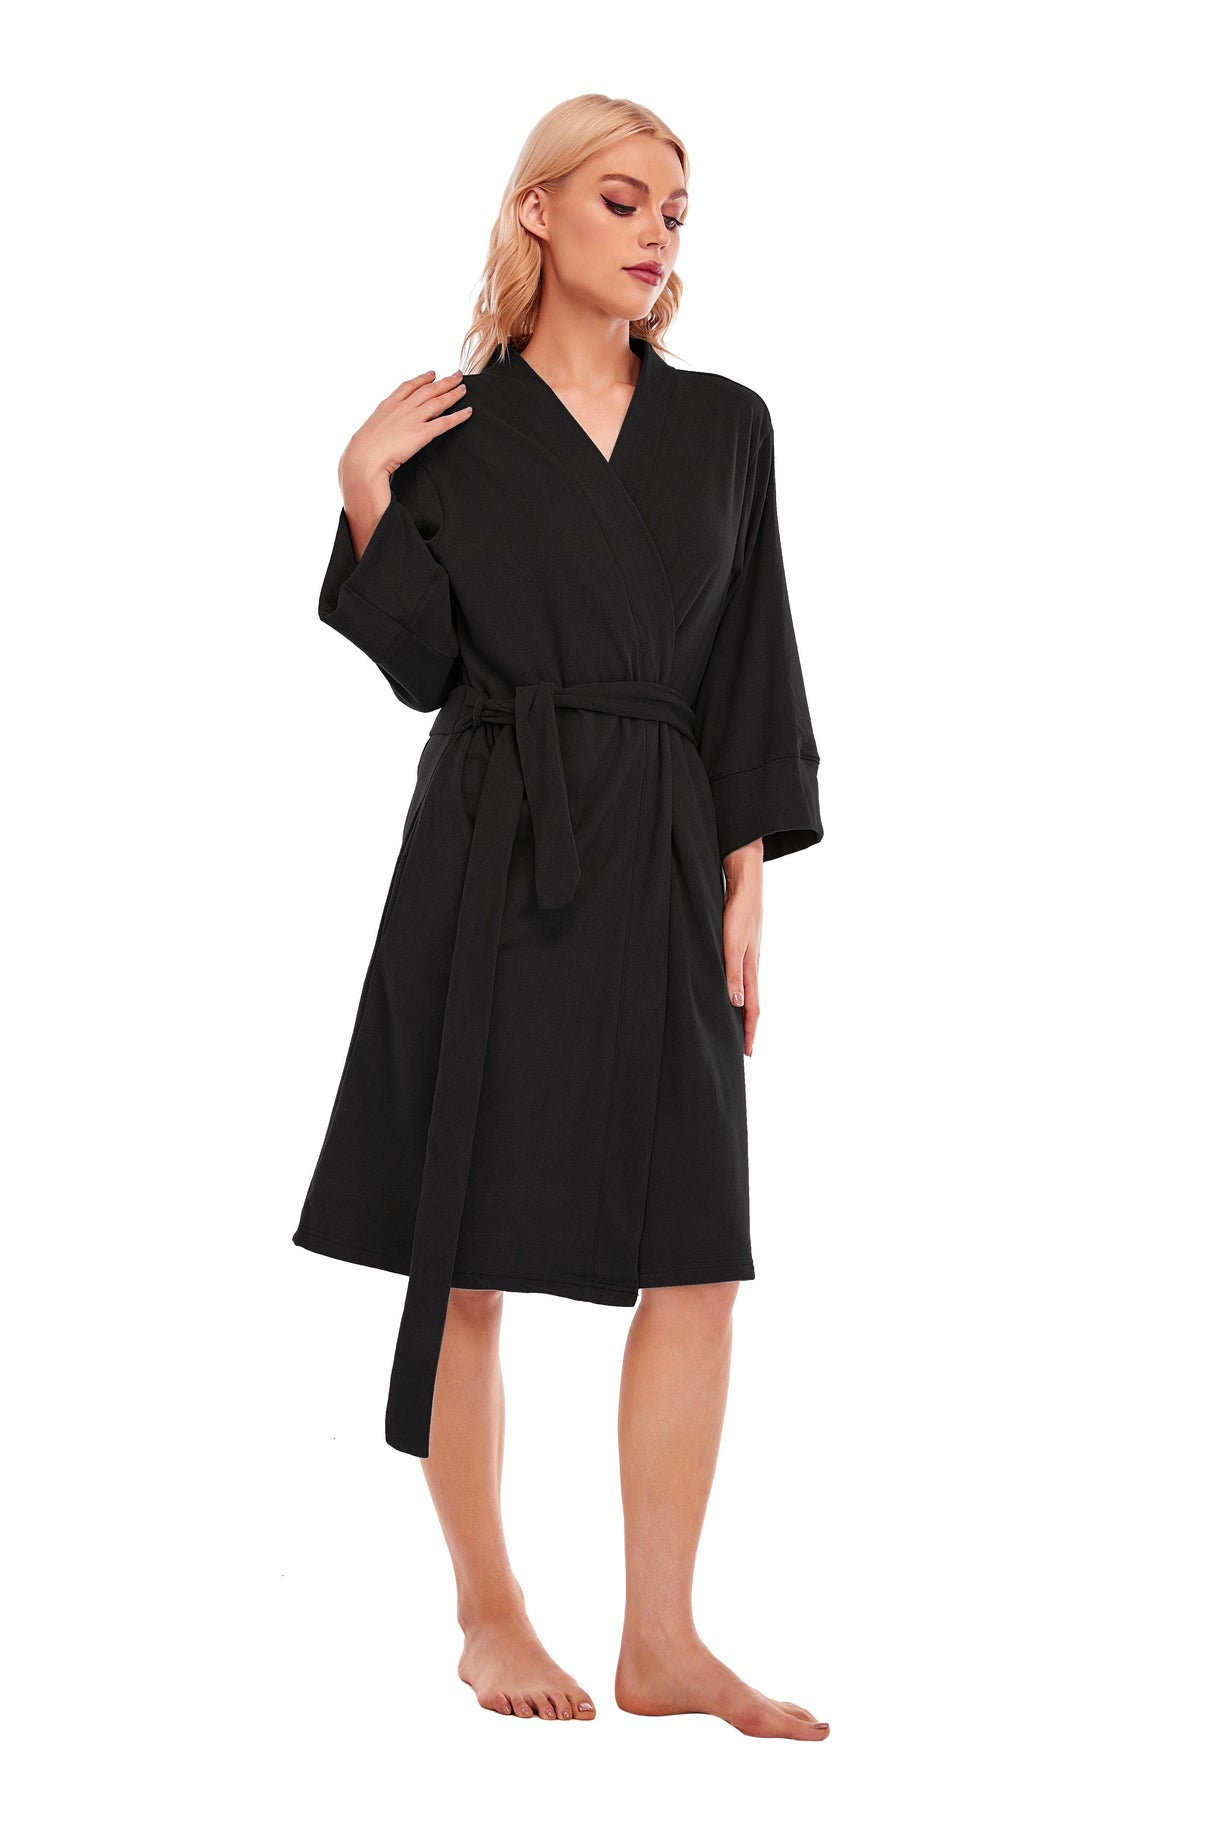 LUBOT Women's Robes Bathrobe Lightweight Microfleece Loungewear Black - GexWorldwide